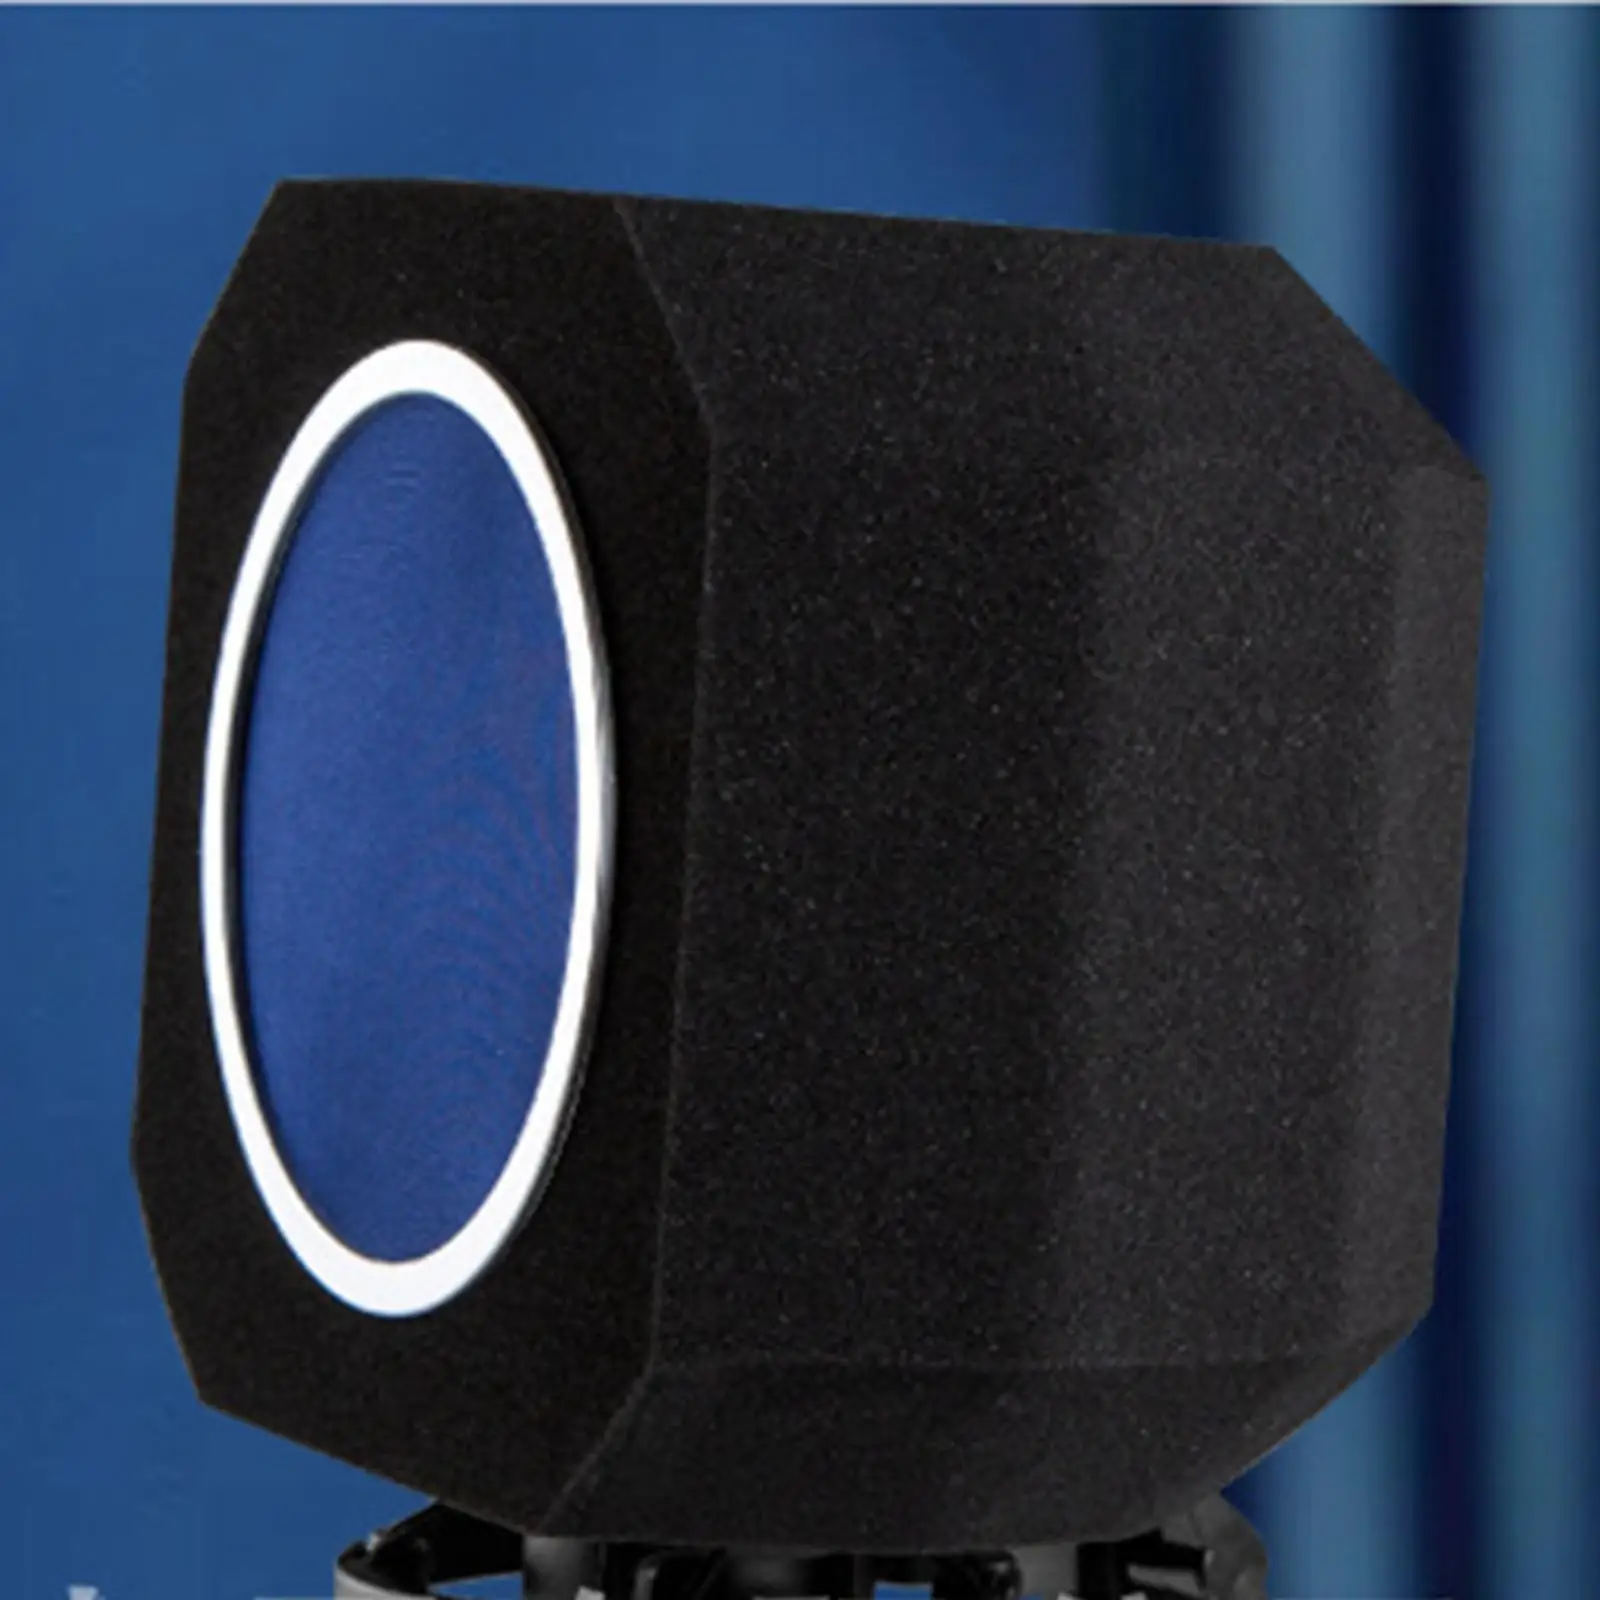 Vocal Studio Booth Studio Accessories Sound Recording Booth Microphone Isolation Shield Sound Shield Foam for Studio Recording